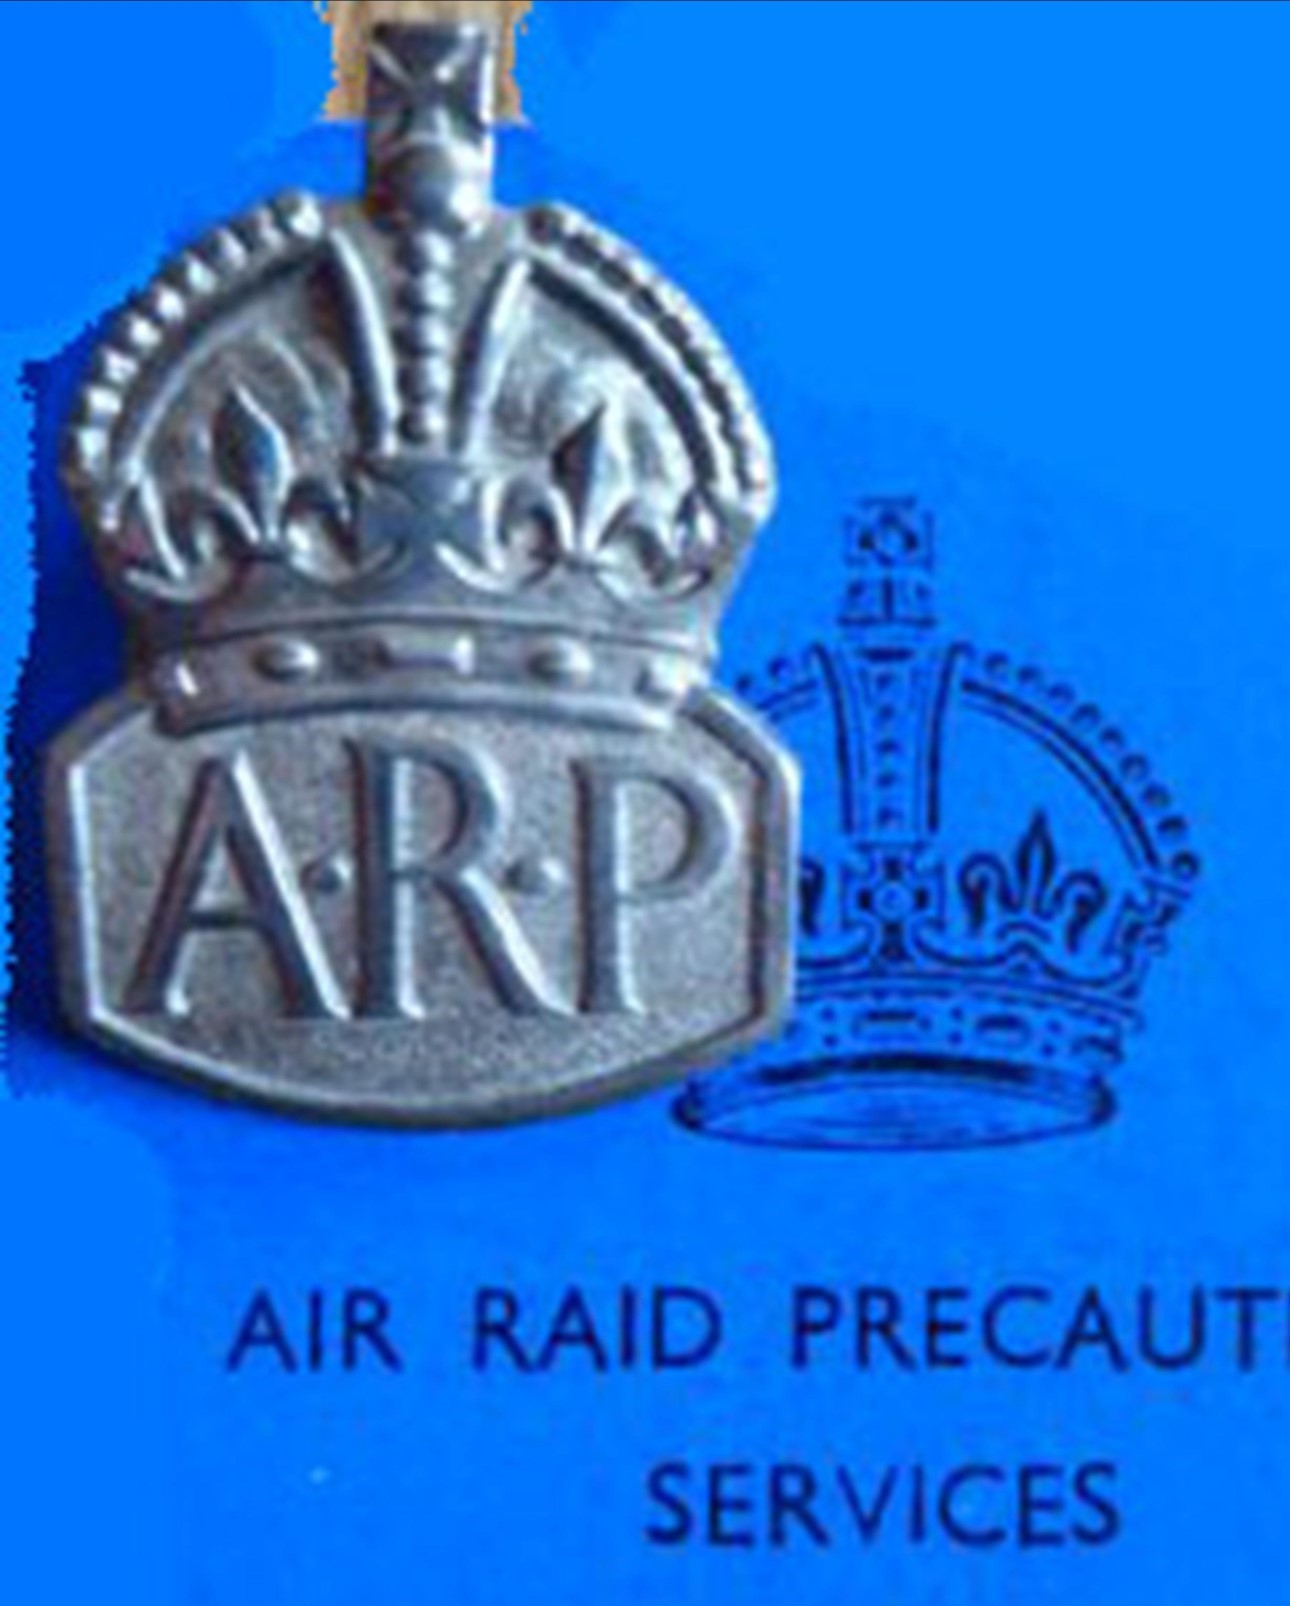 Silver ARP badge from World War II